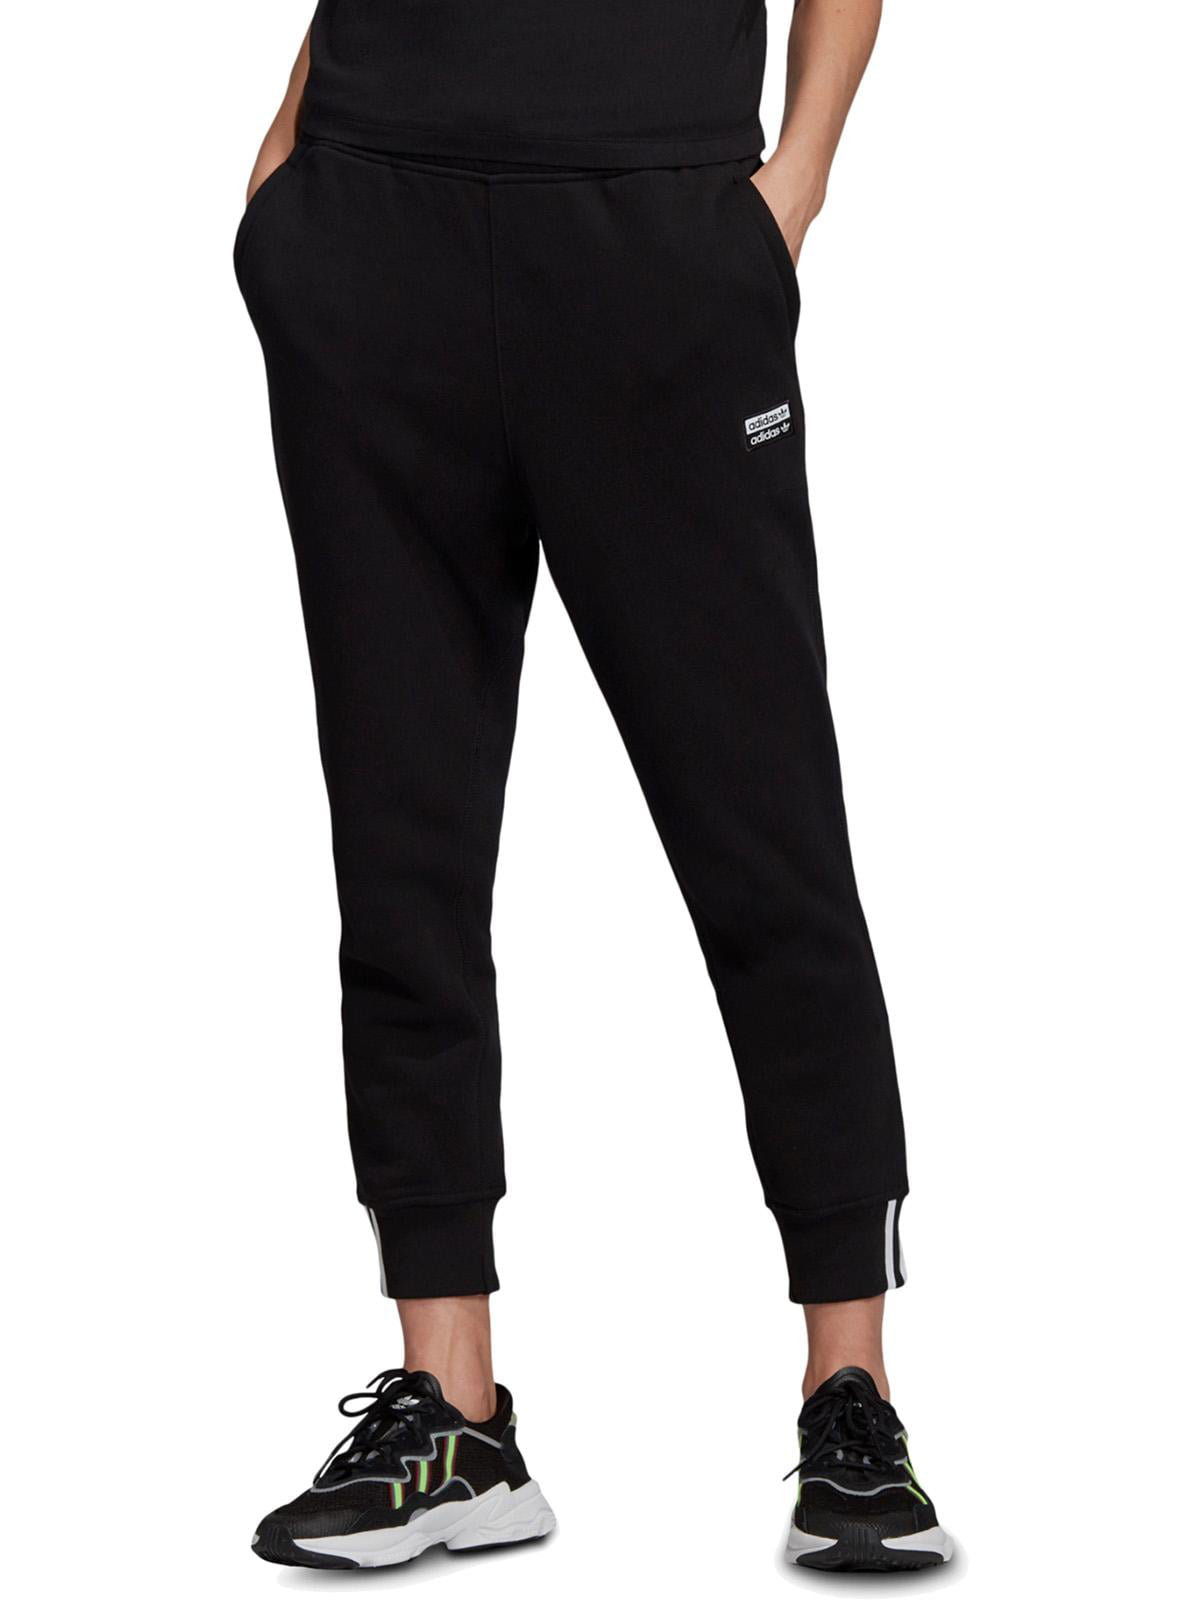 Adidas - Adidas Womens Crop Sweatpants Jogger Pants - Walmart.com ...